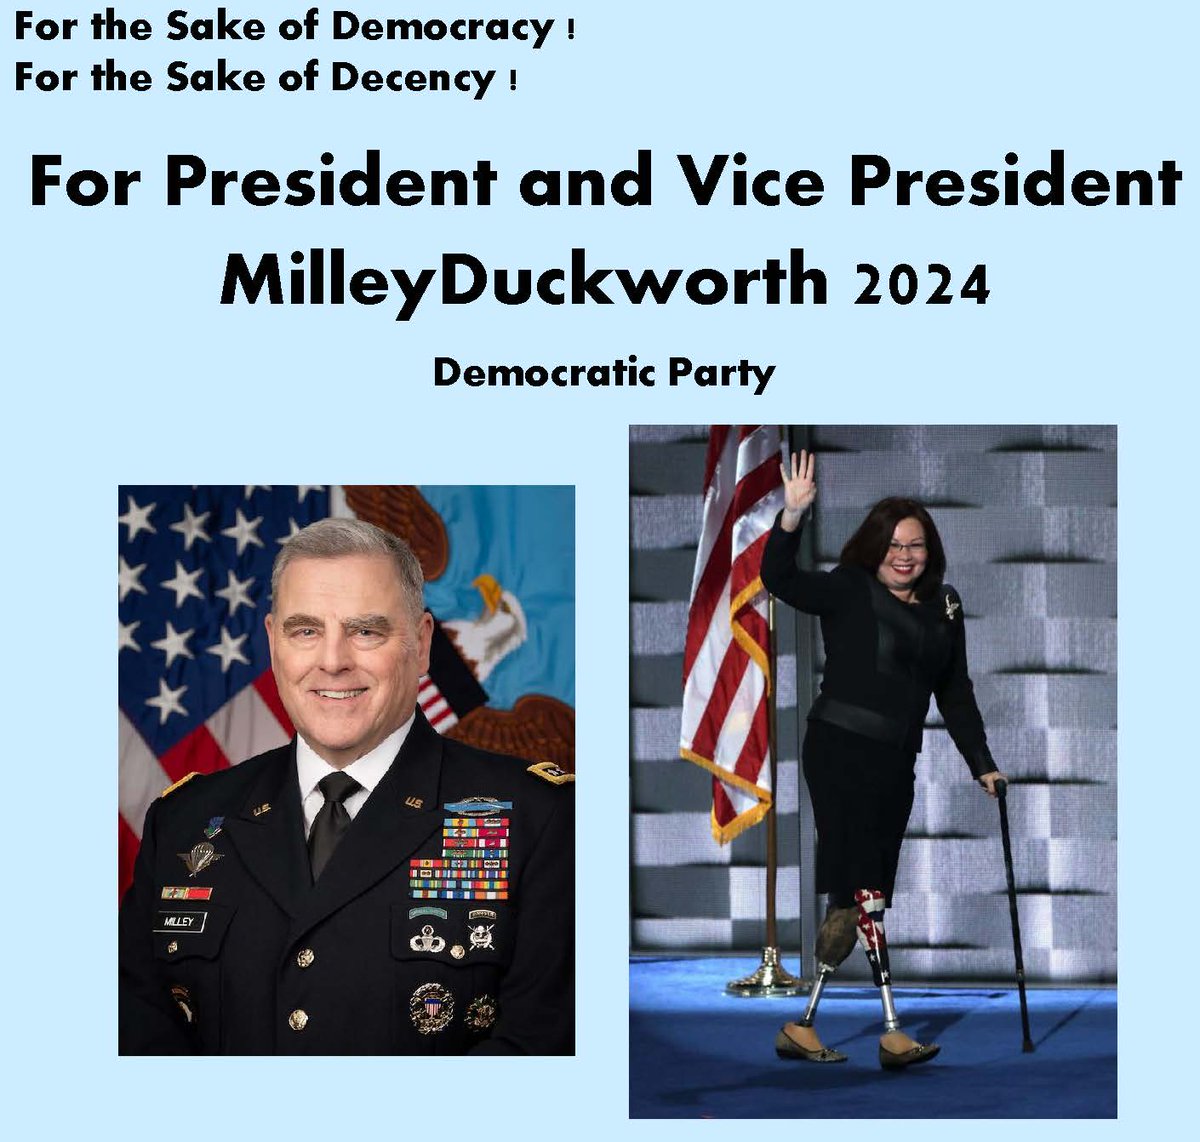 Milley/Duckworth!  2024 Democratic Dream Ticket.  #election #president #markmilley @TammyDuckworth